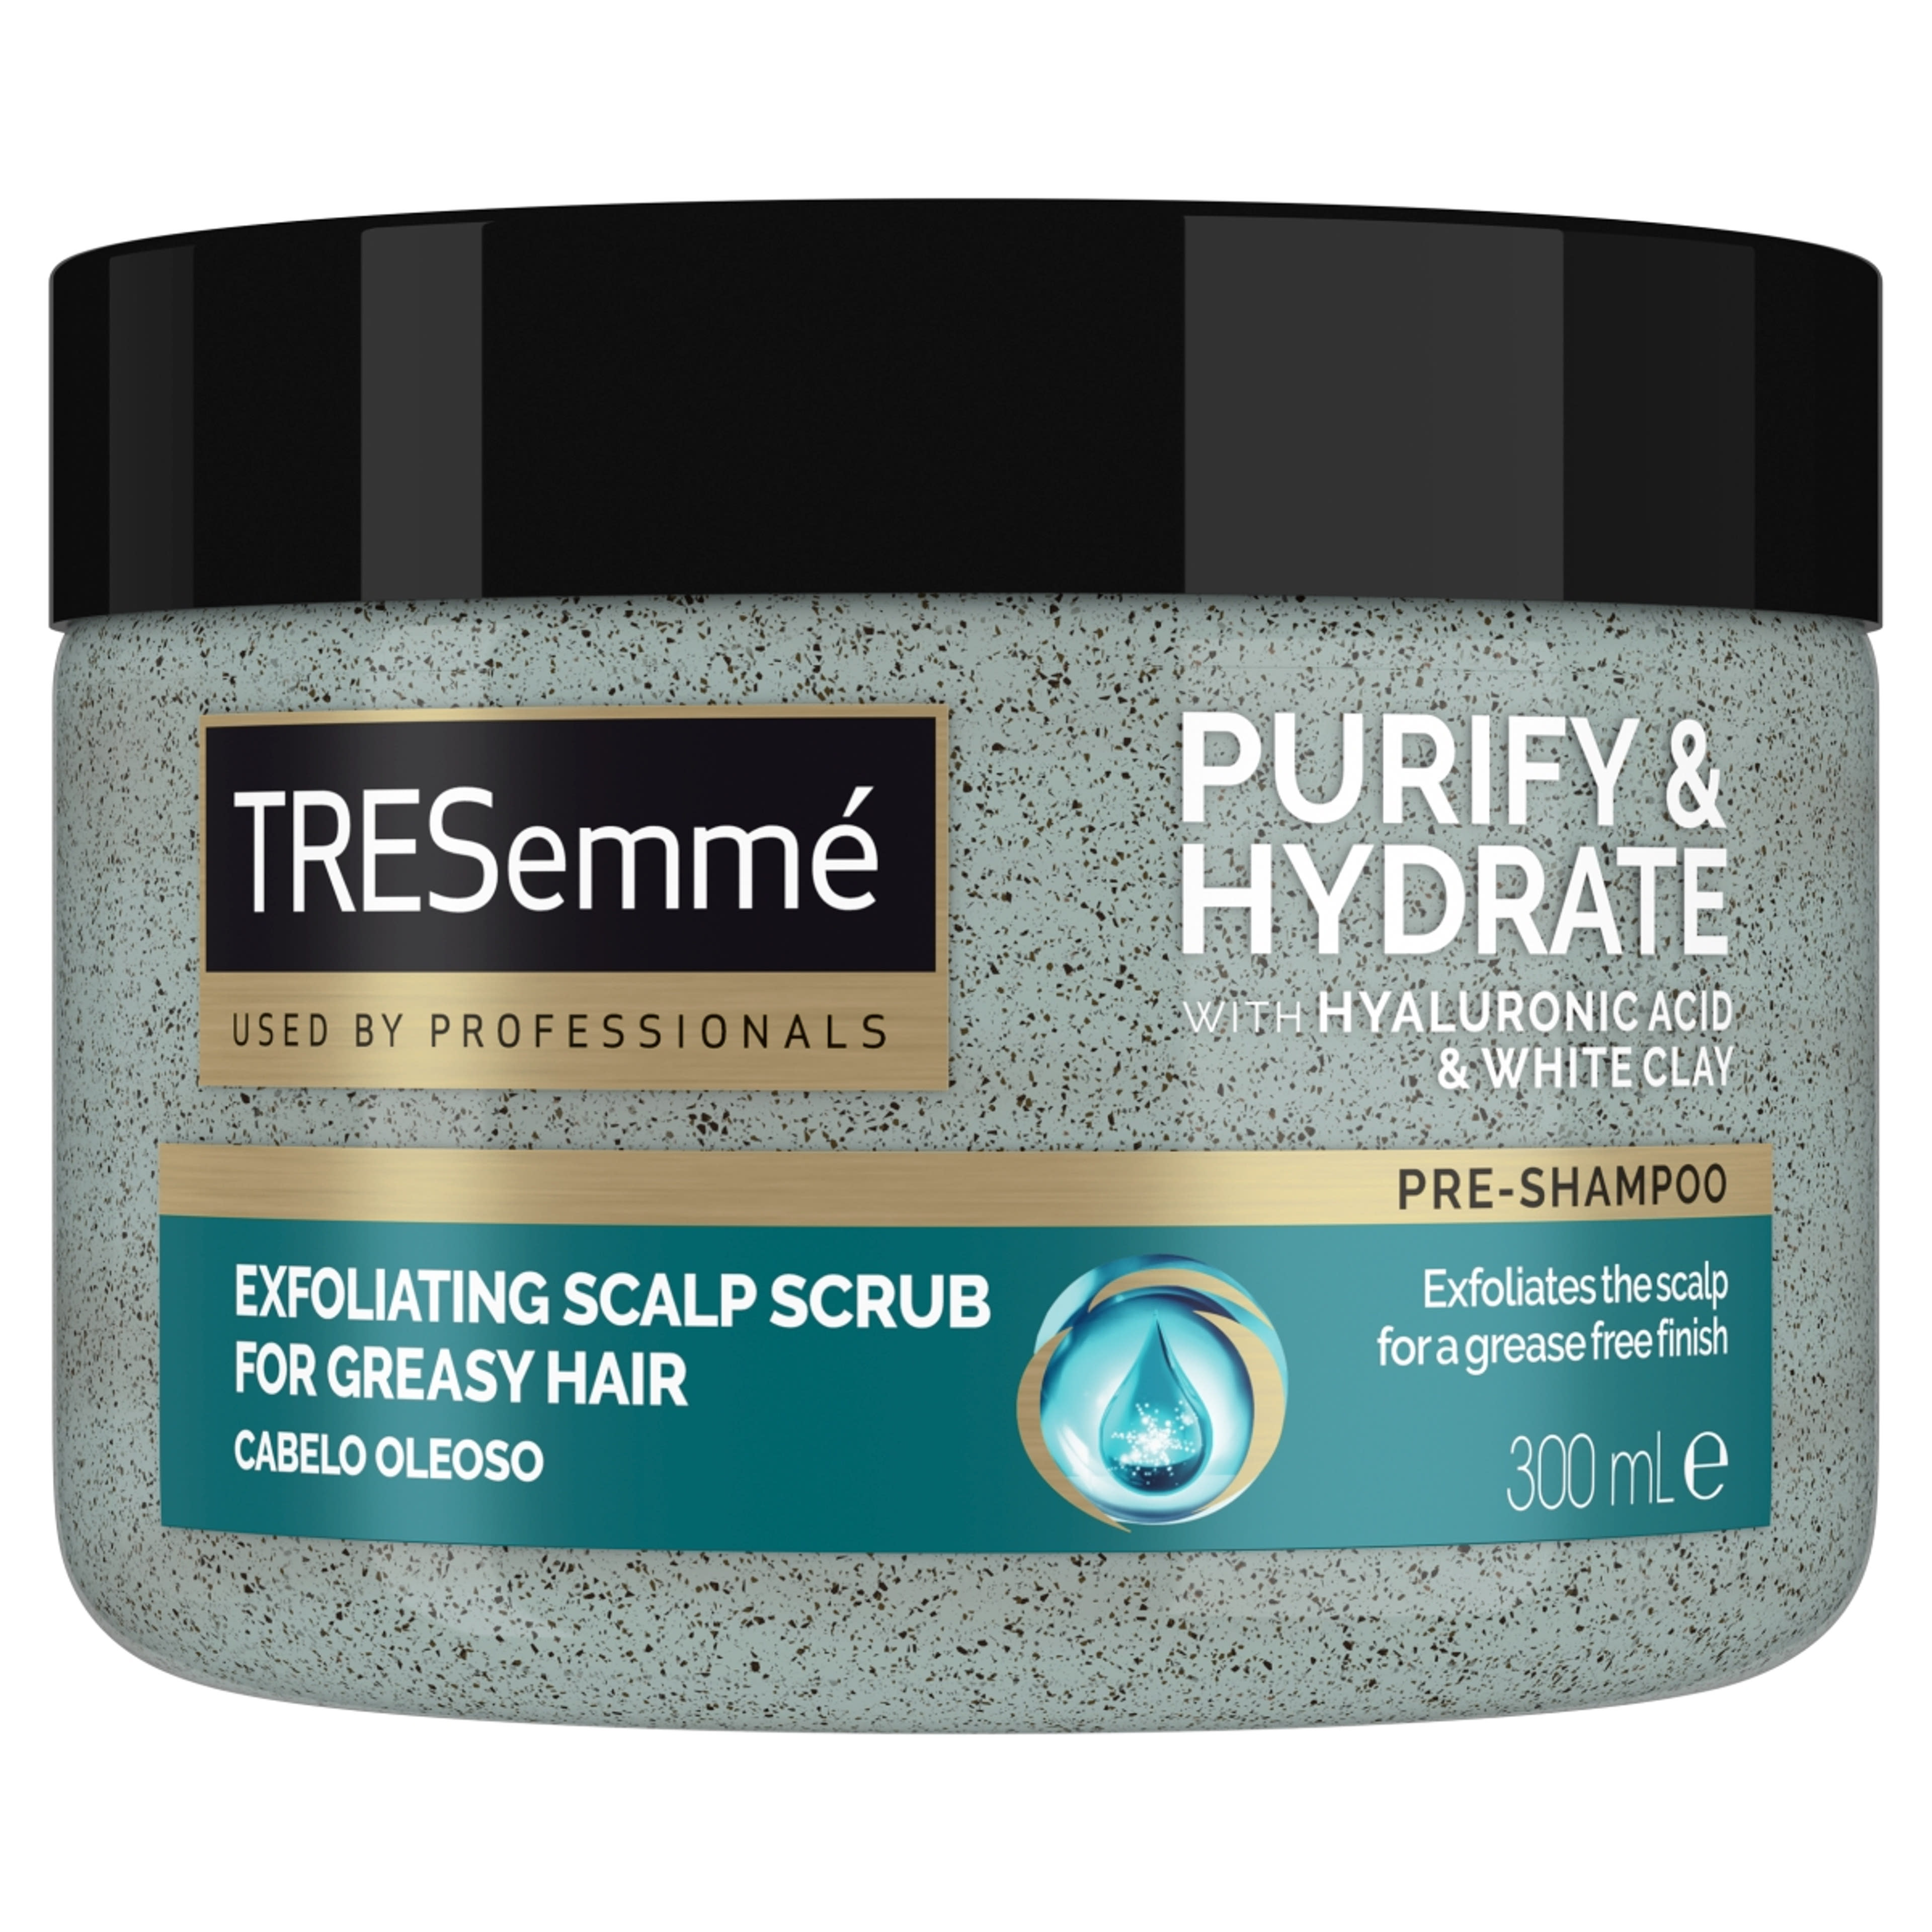 Tresemme purify & hydrate fejbőr radír - 300 ml-1